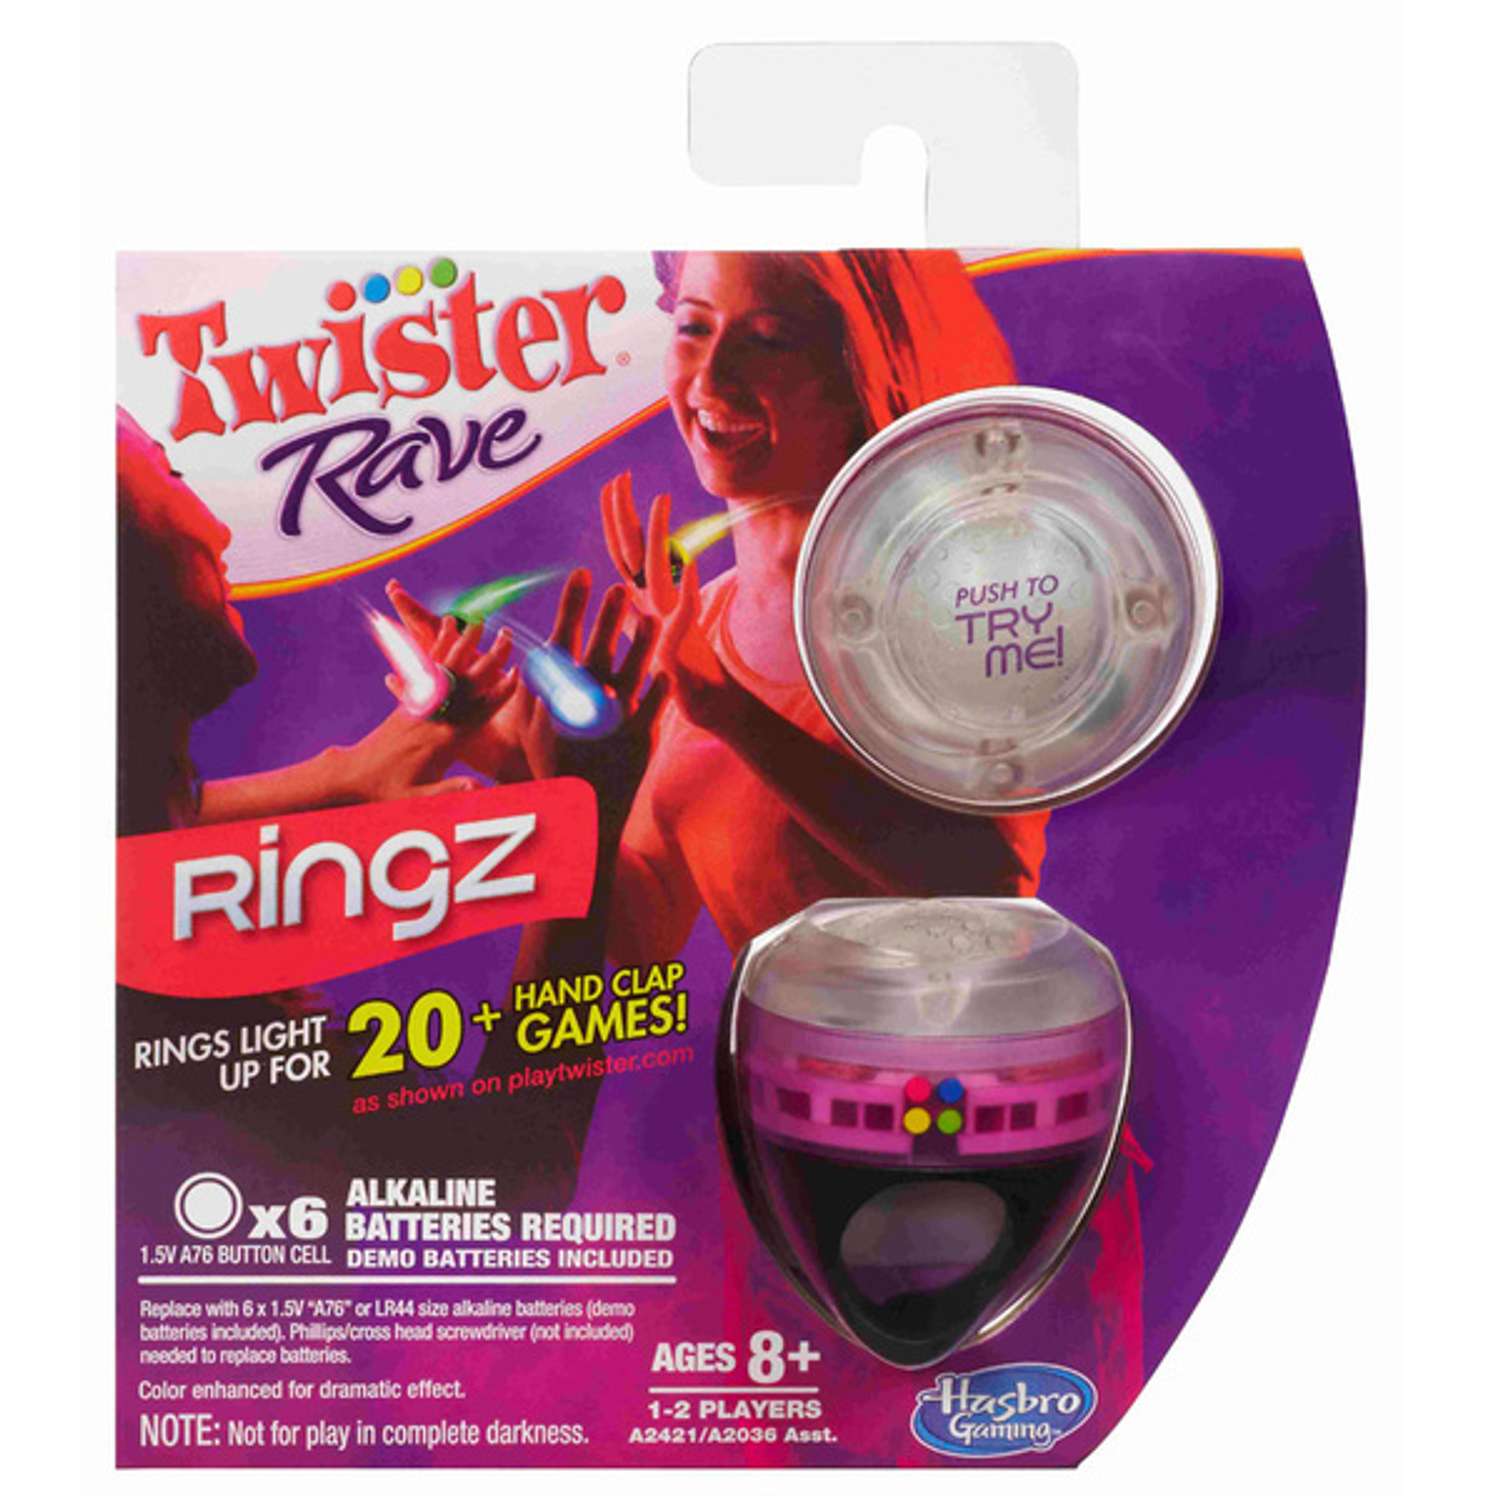 Twister Rave Hasbro Games Кольца в ассортименте - фото 1